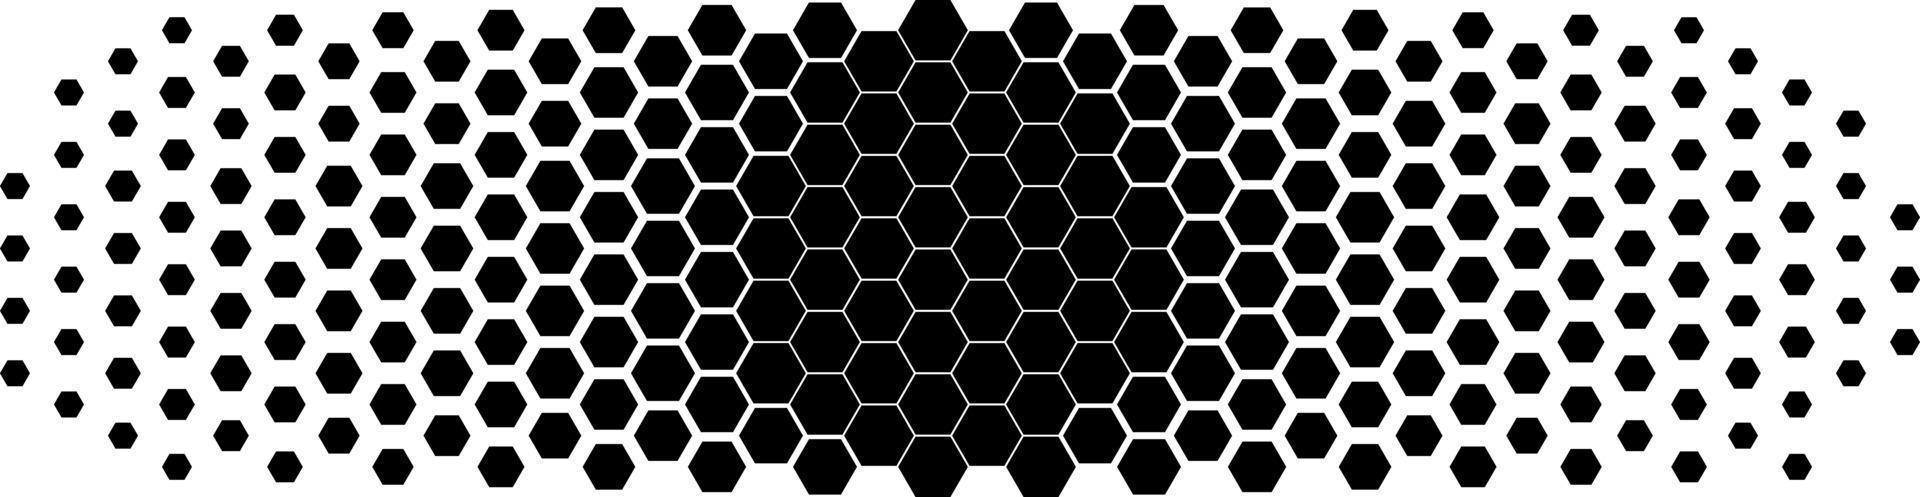 Hexagonal halftone pattern vector